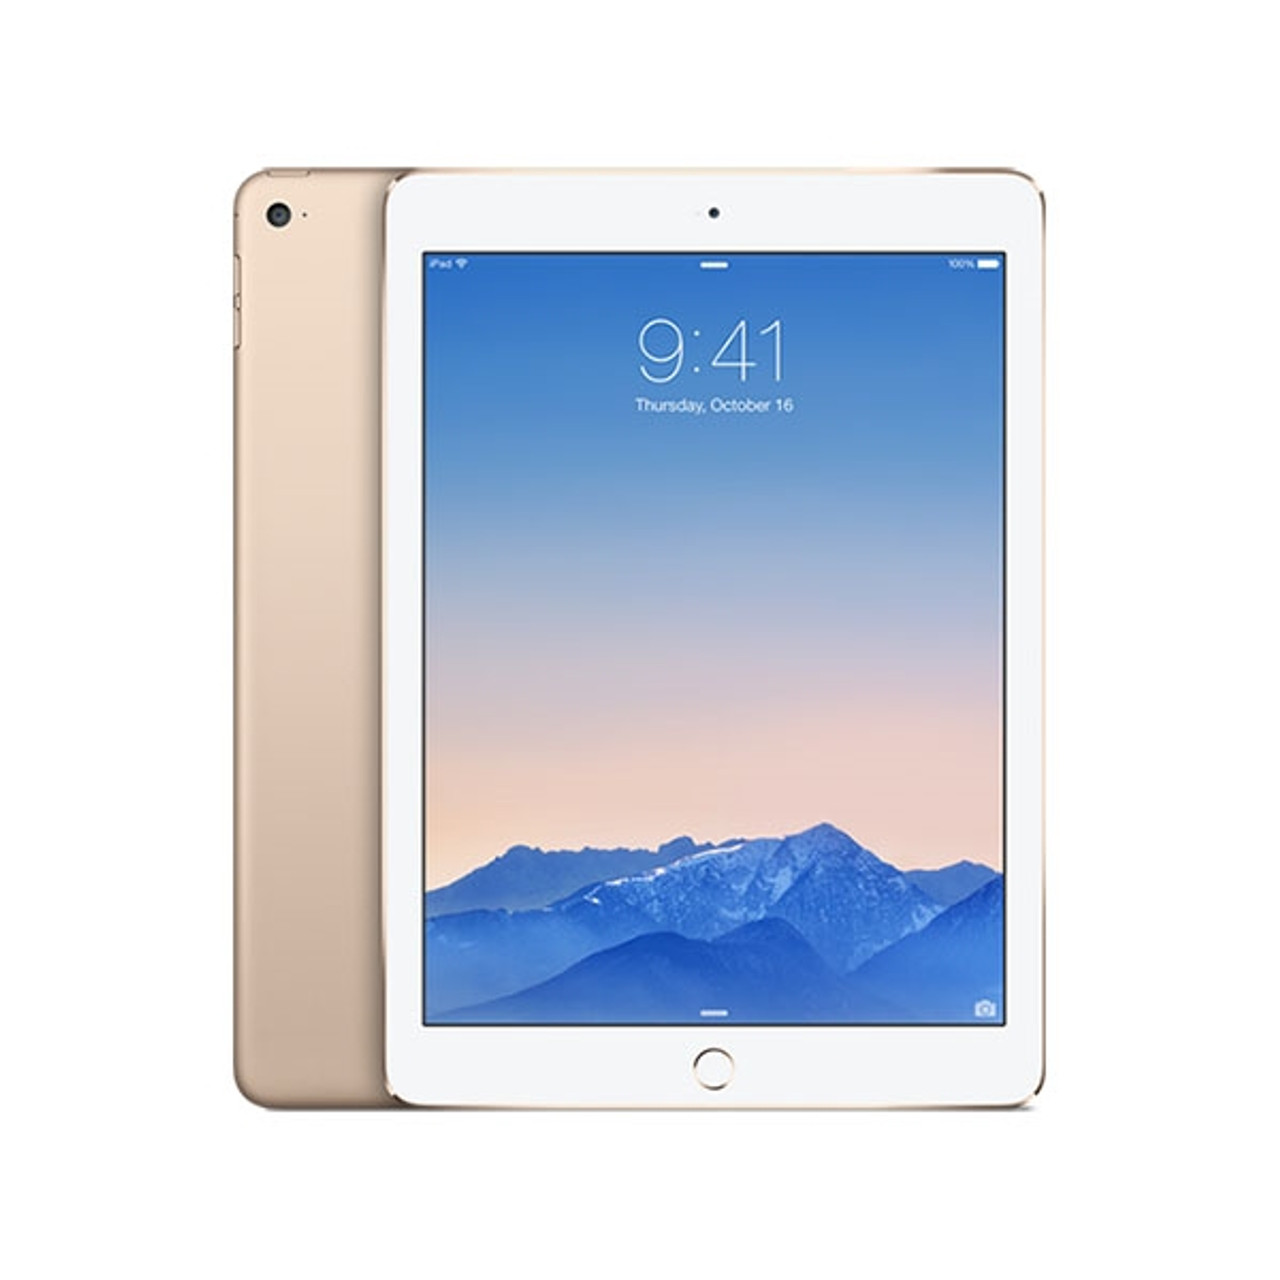 Apple iPad Air 2 Wi-Fi 64GB - Gold MH182LL/A - Very Good Condition*